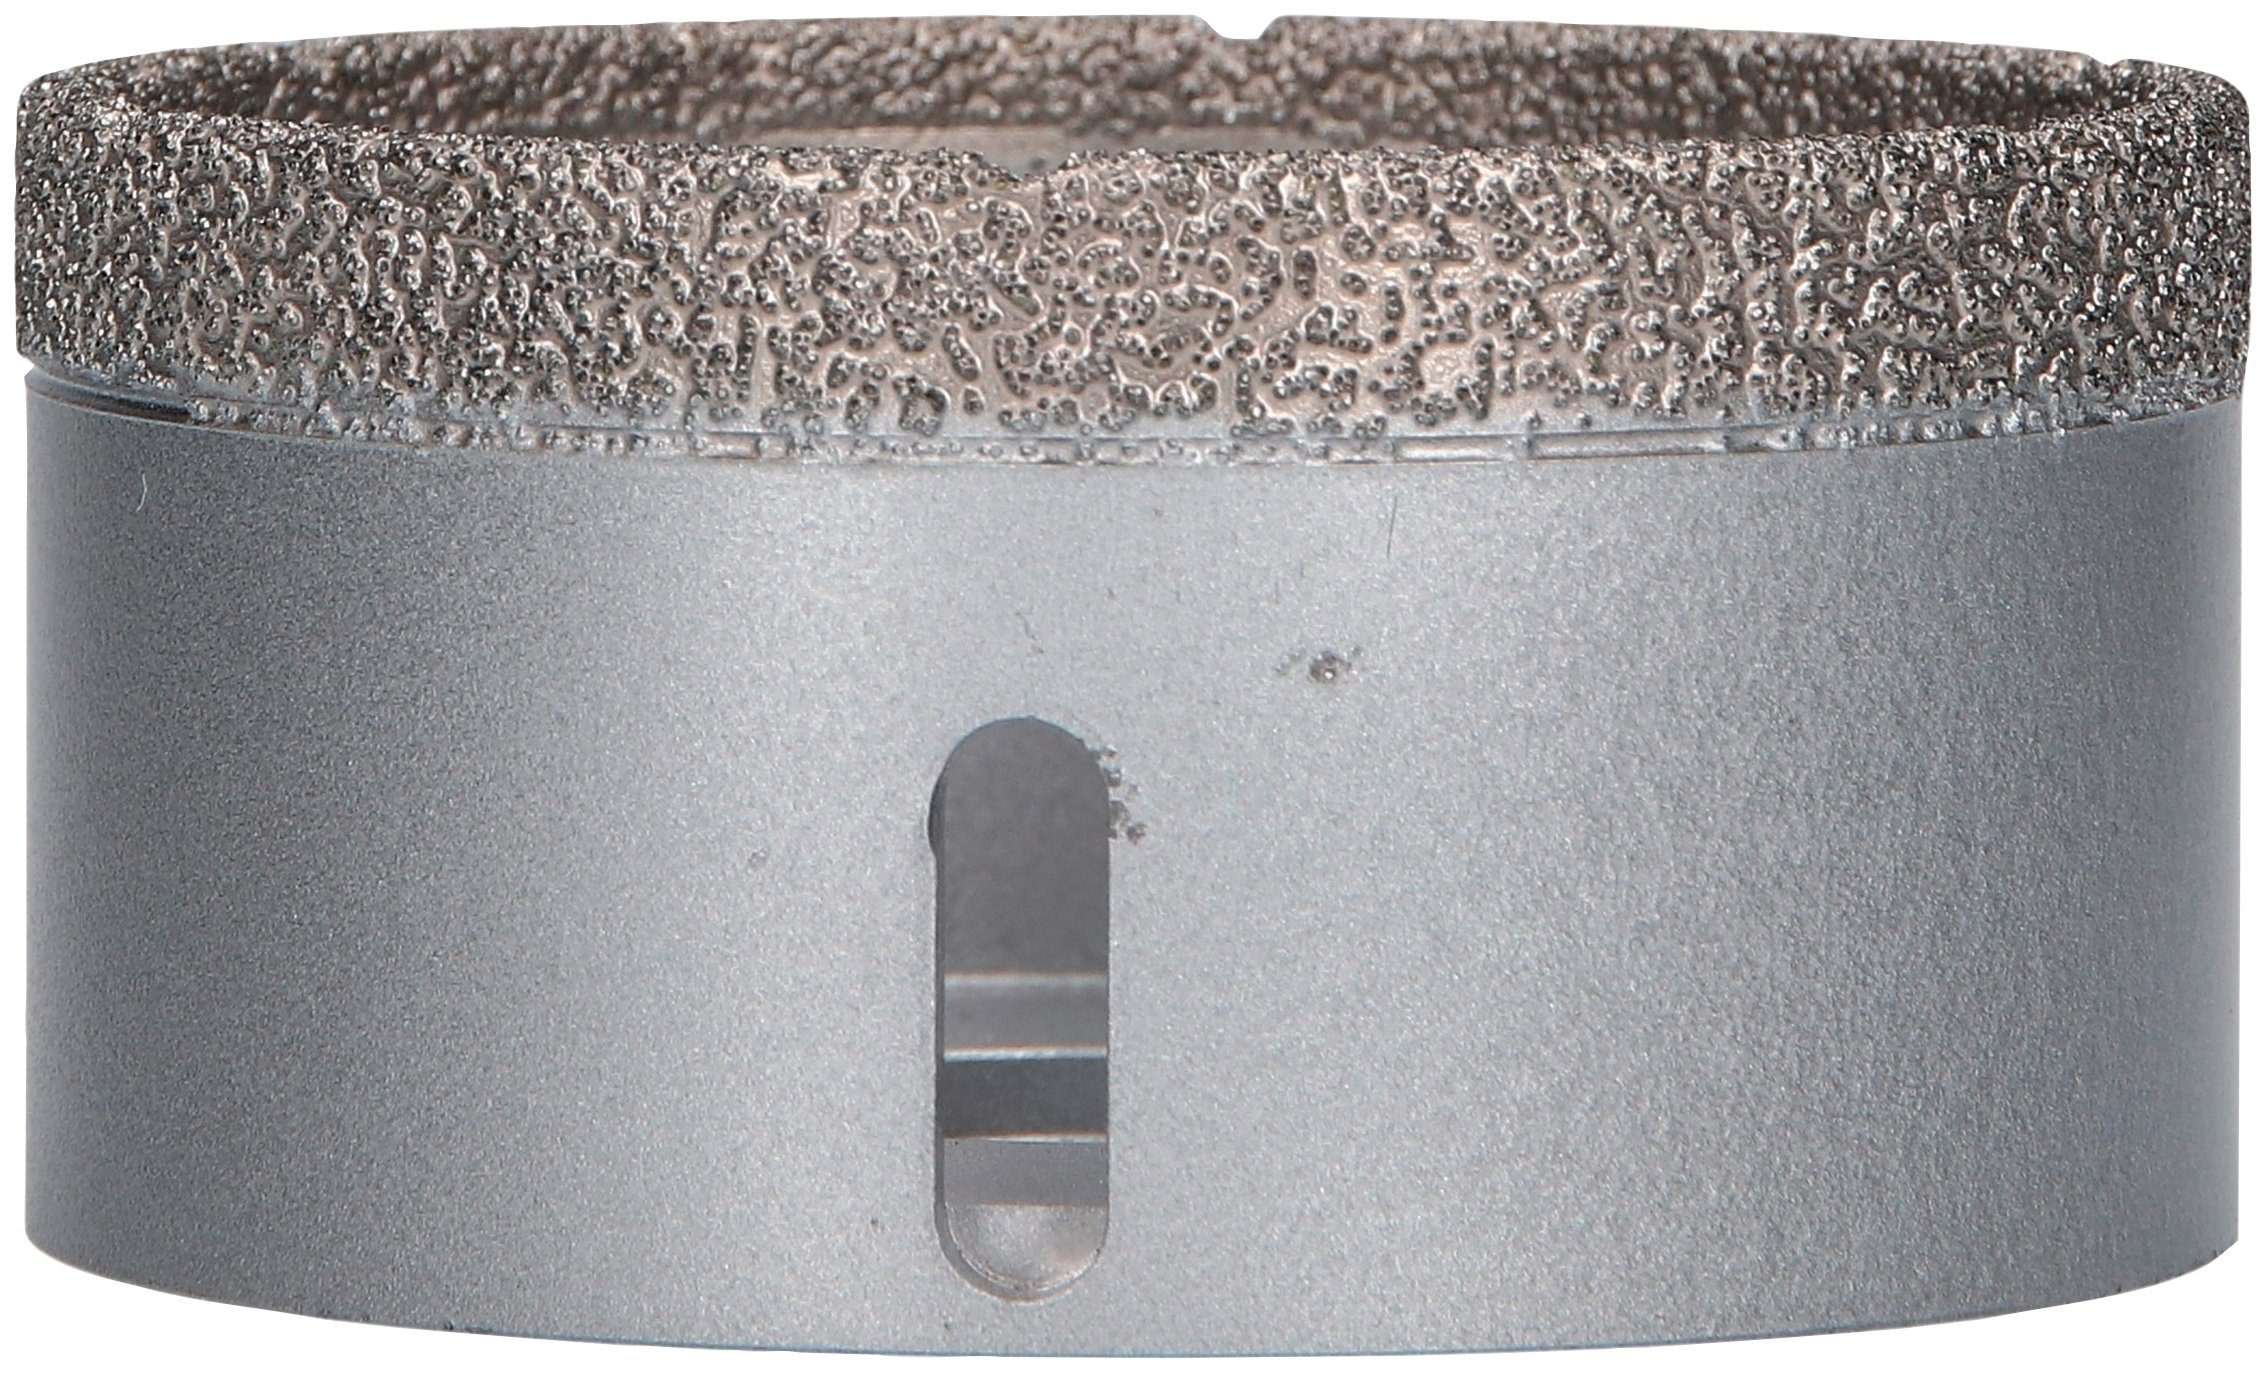 Bosch Professional Diamanttrockenbohrer Best Speed, Ceramic X-LOCK Dry mm for 35 mm, 80 Ø x 80